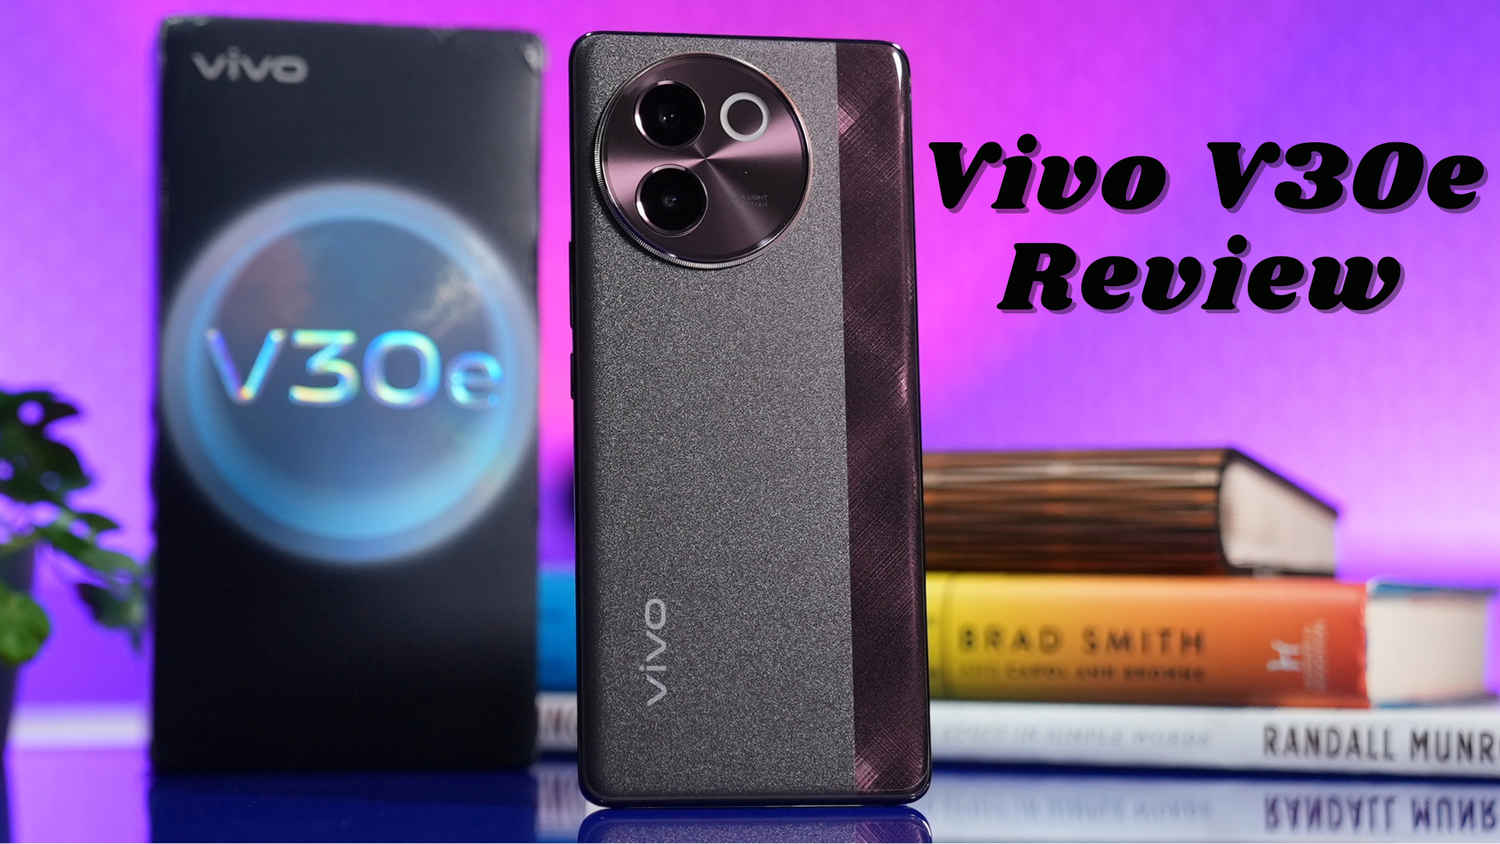 Vivo V30e Review: Exquisite design, excellent battery endurance